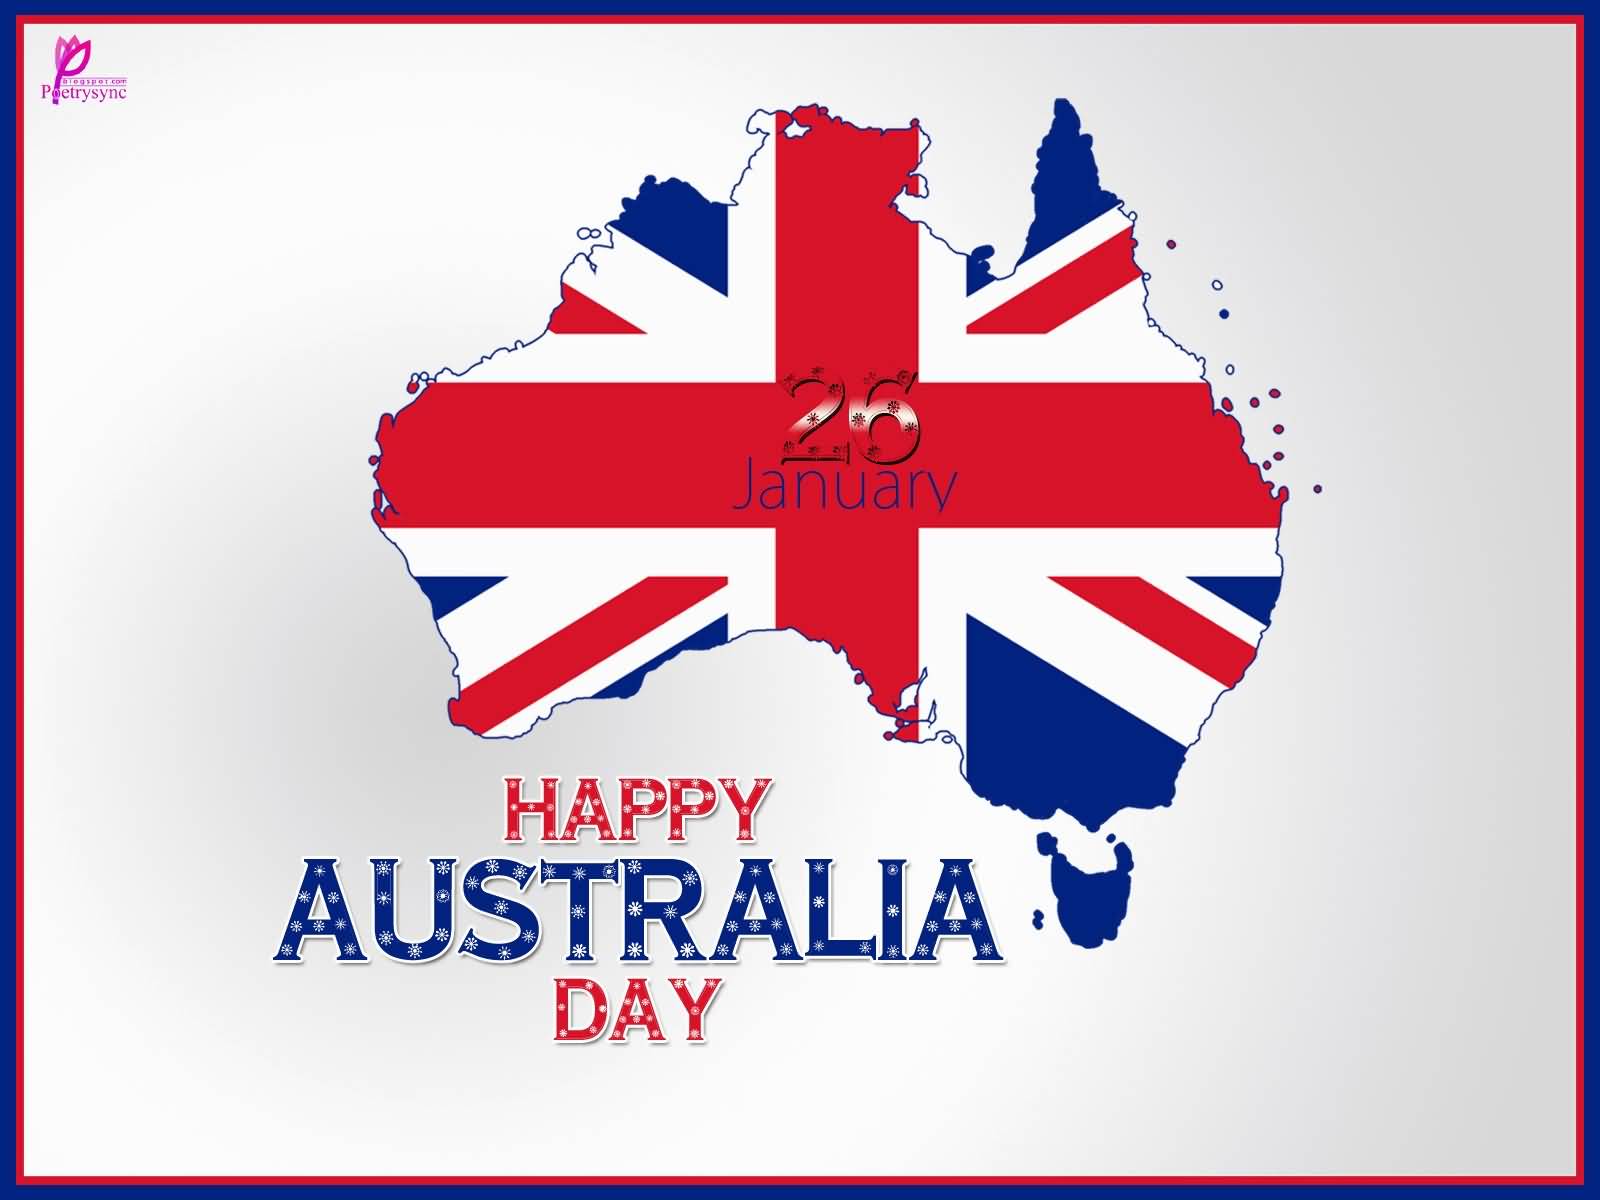 26 Janaury Happy Australia Day Map Illustration